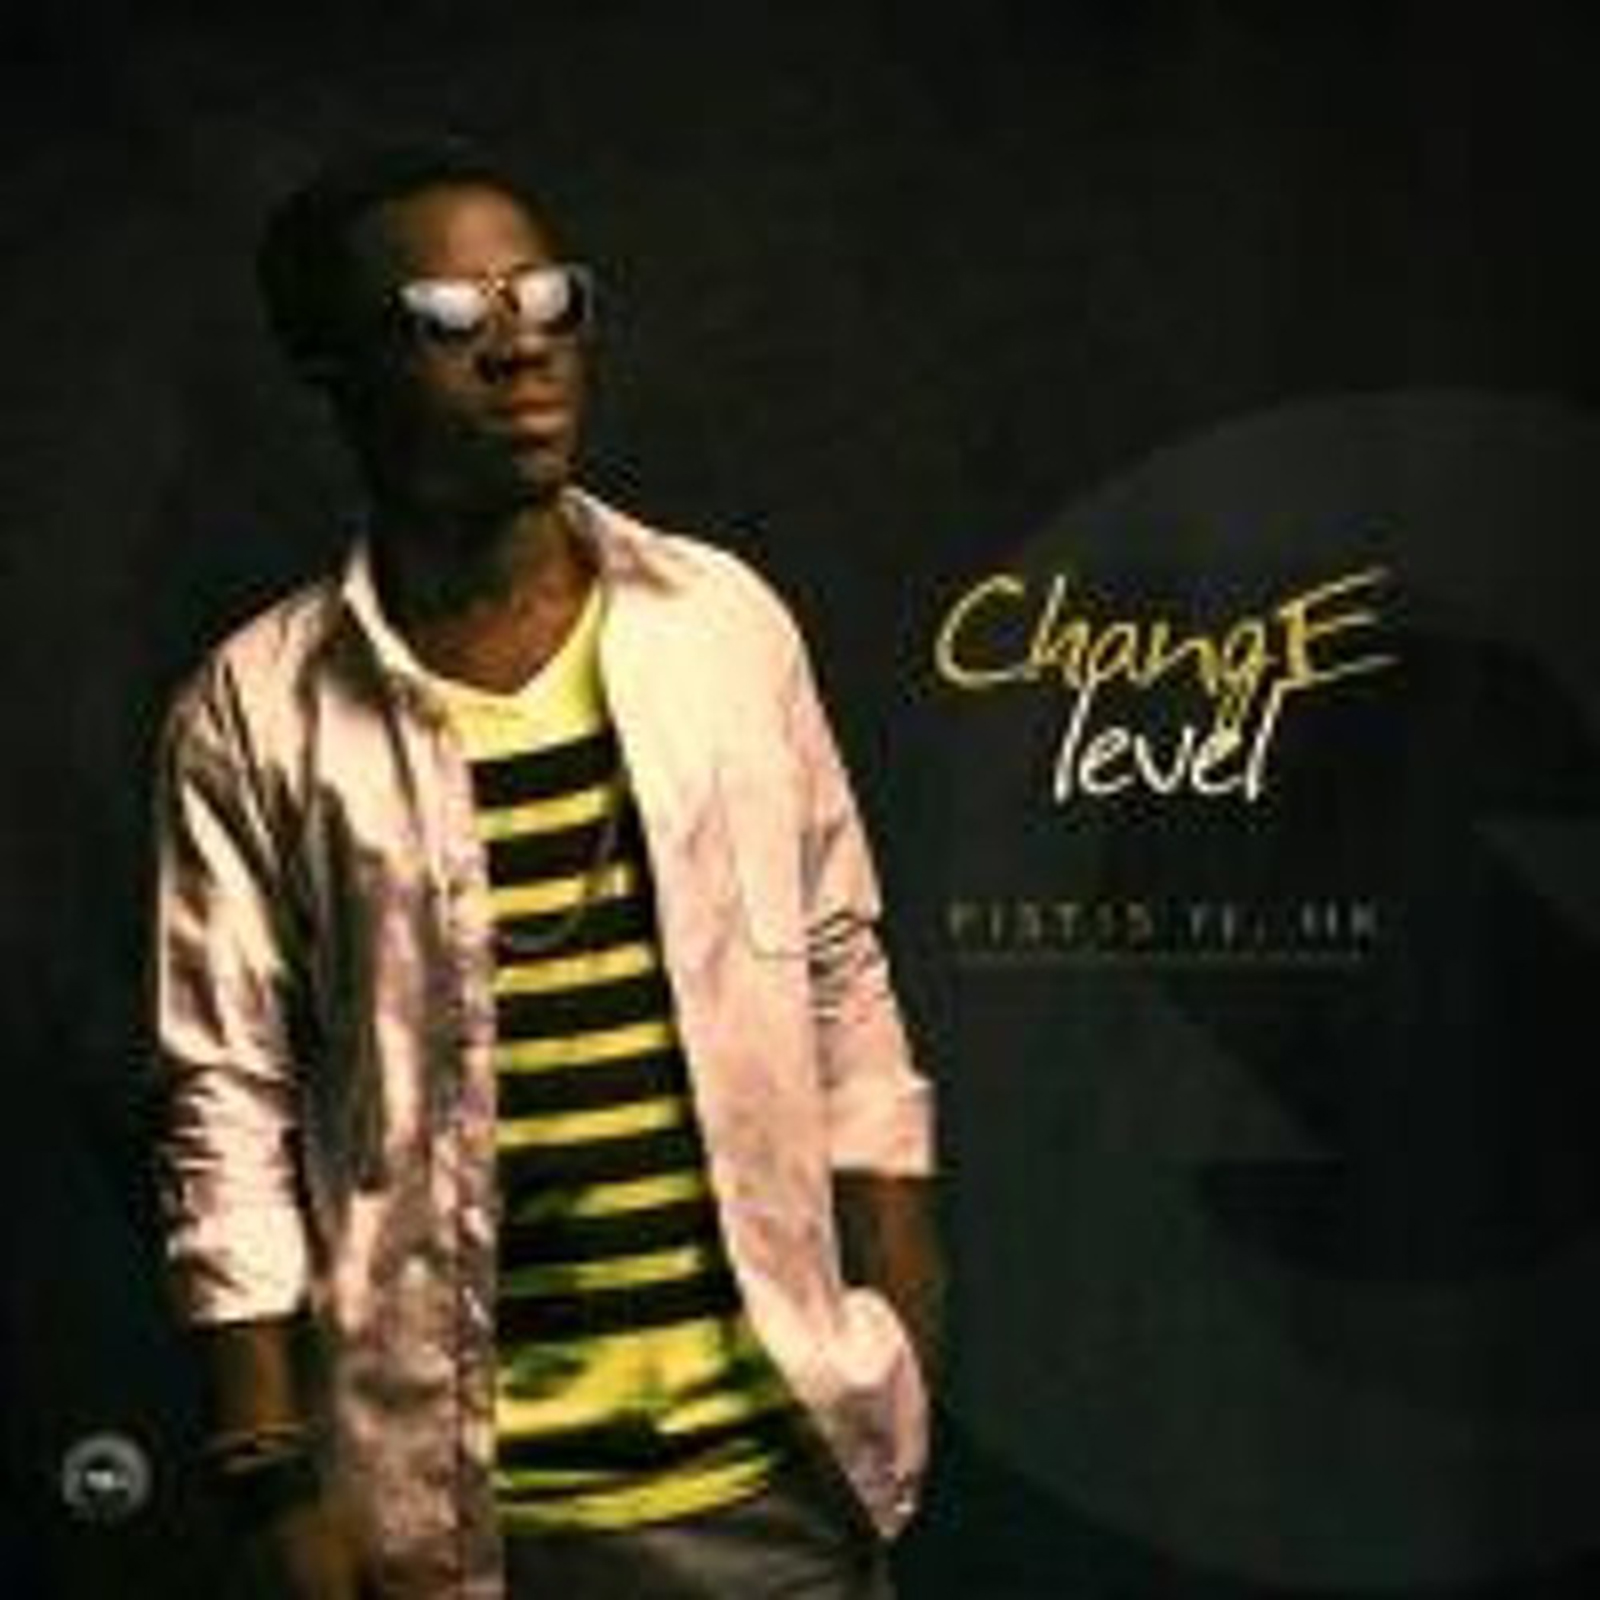 Change levels by Pistis feat. Hk